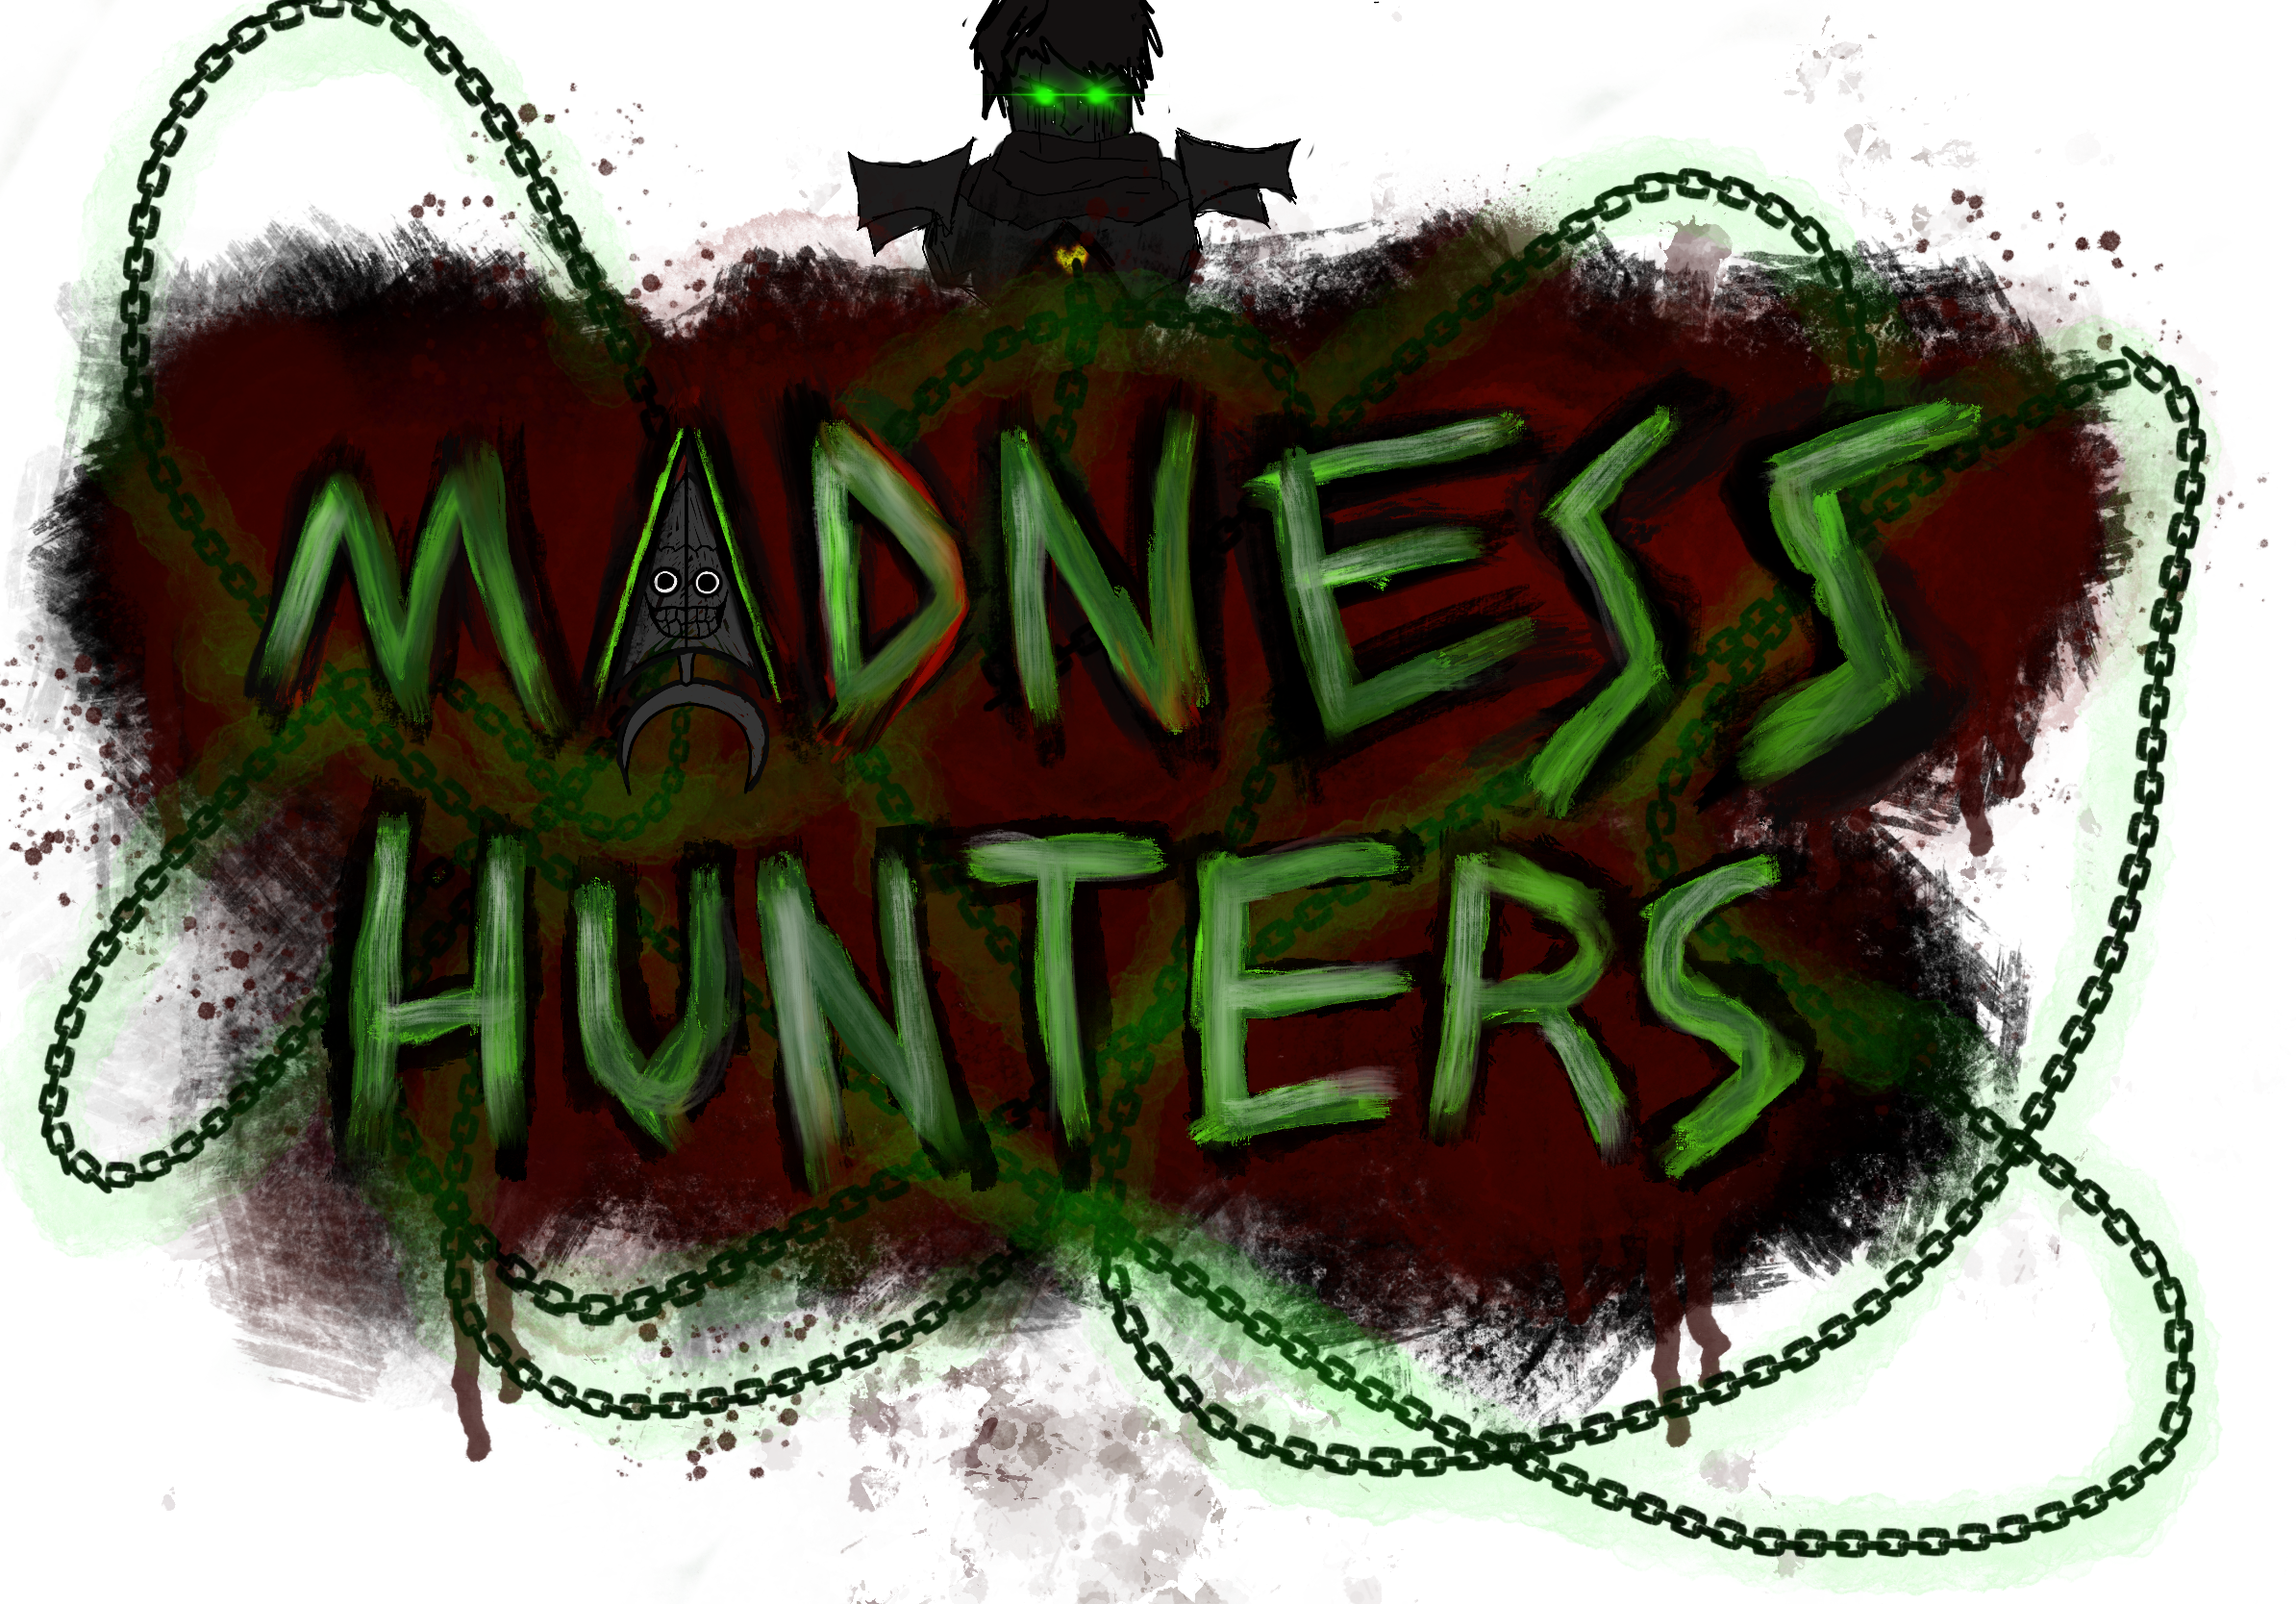 Screenshot from my prototype Madness Hunters